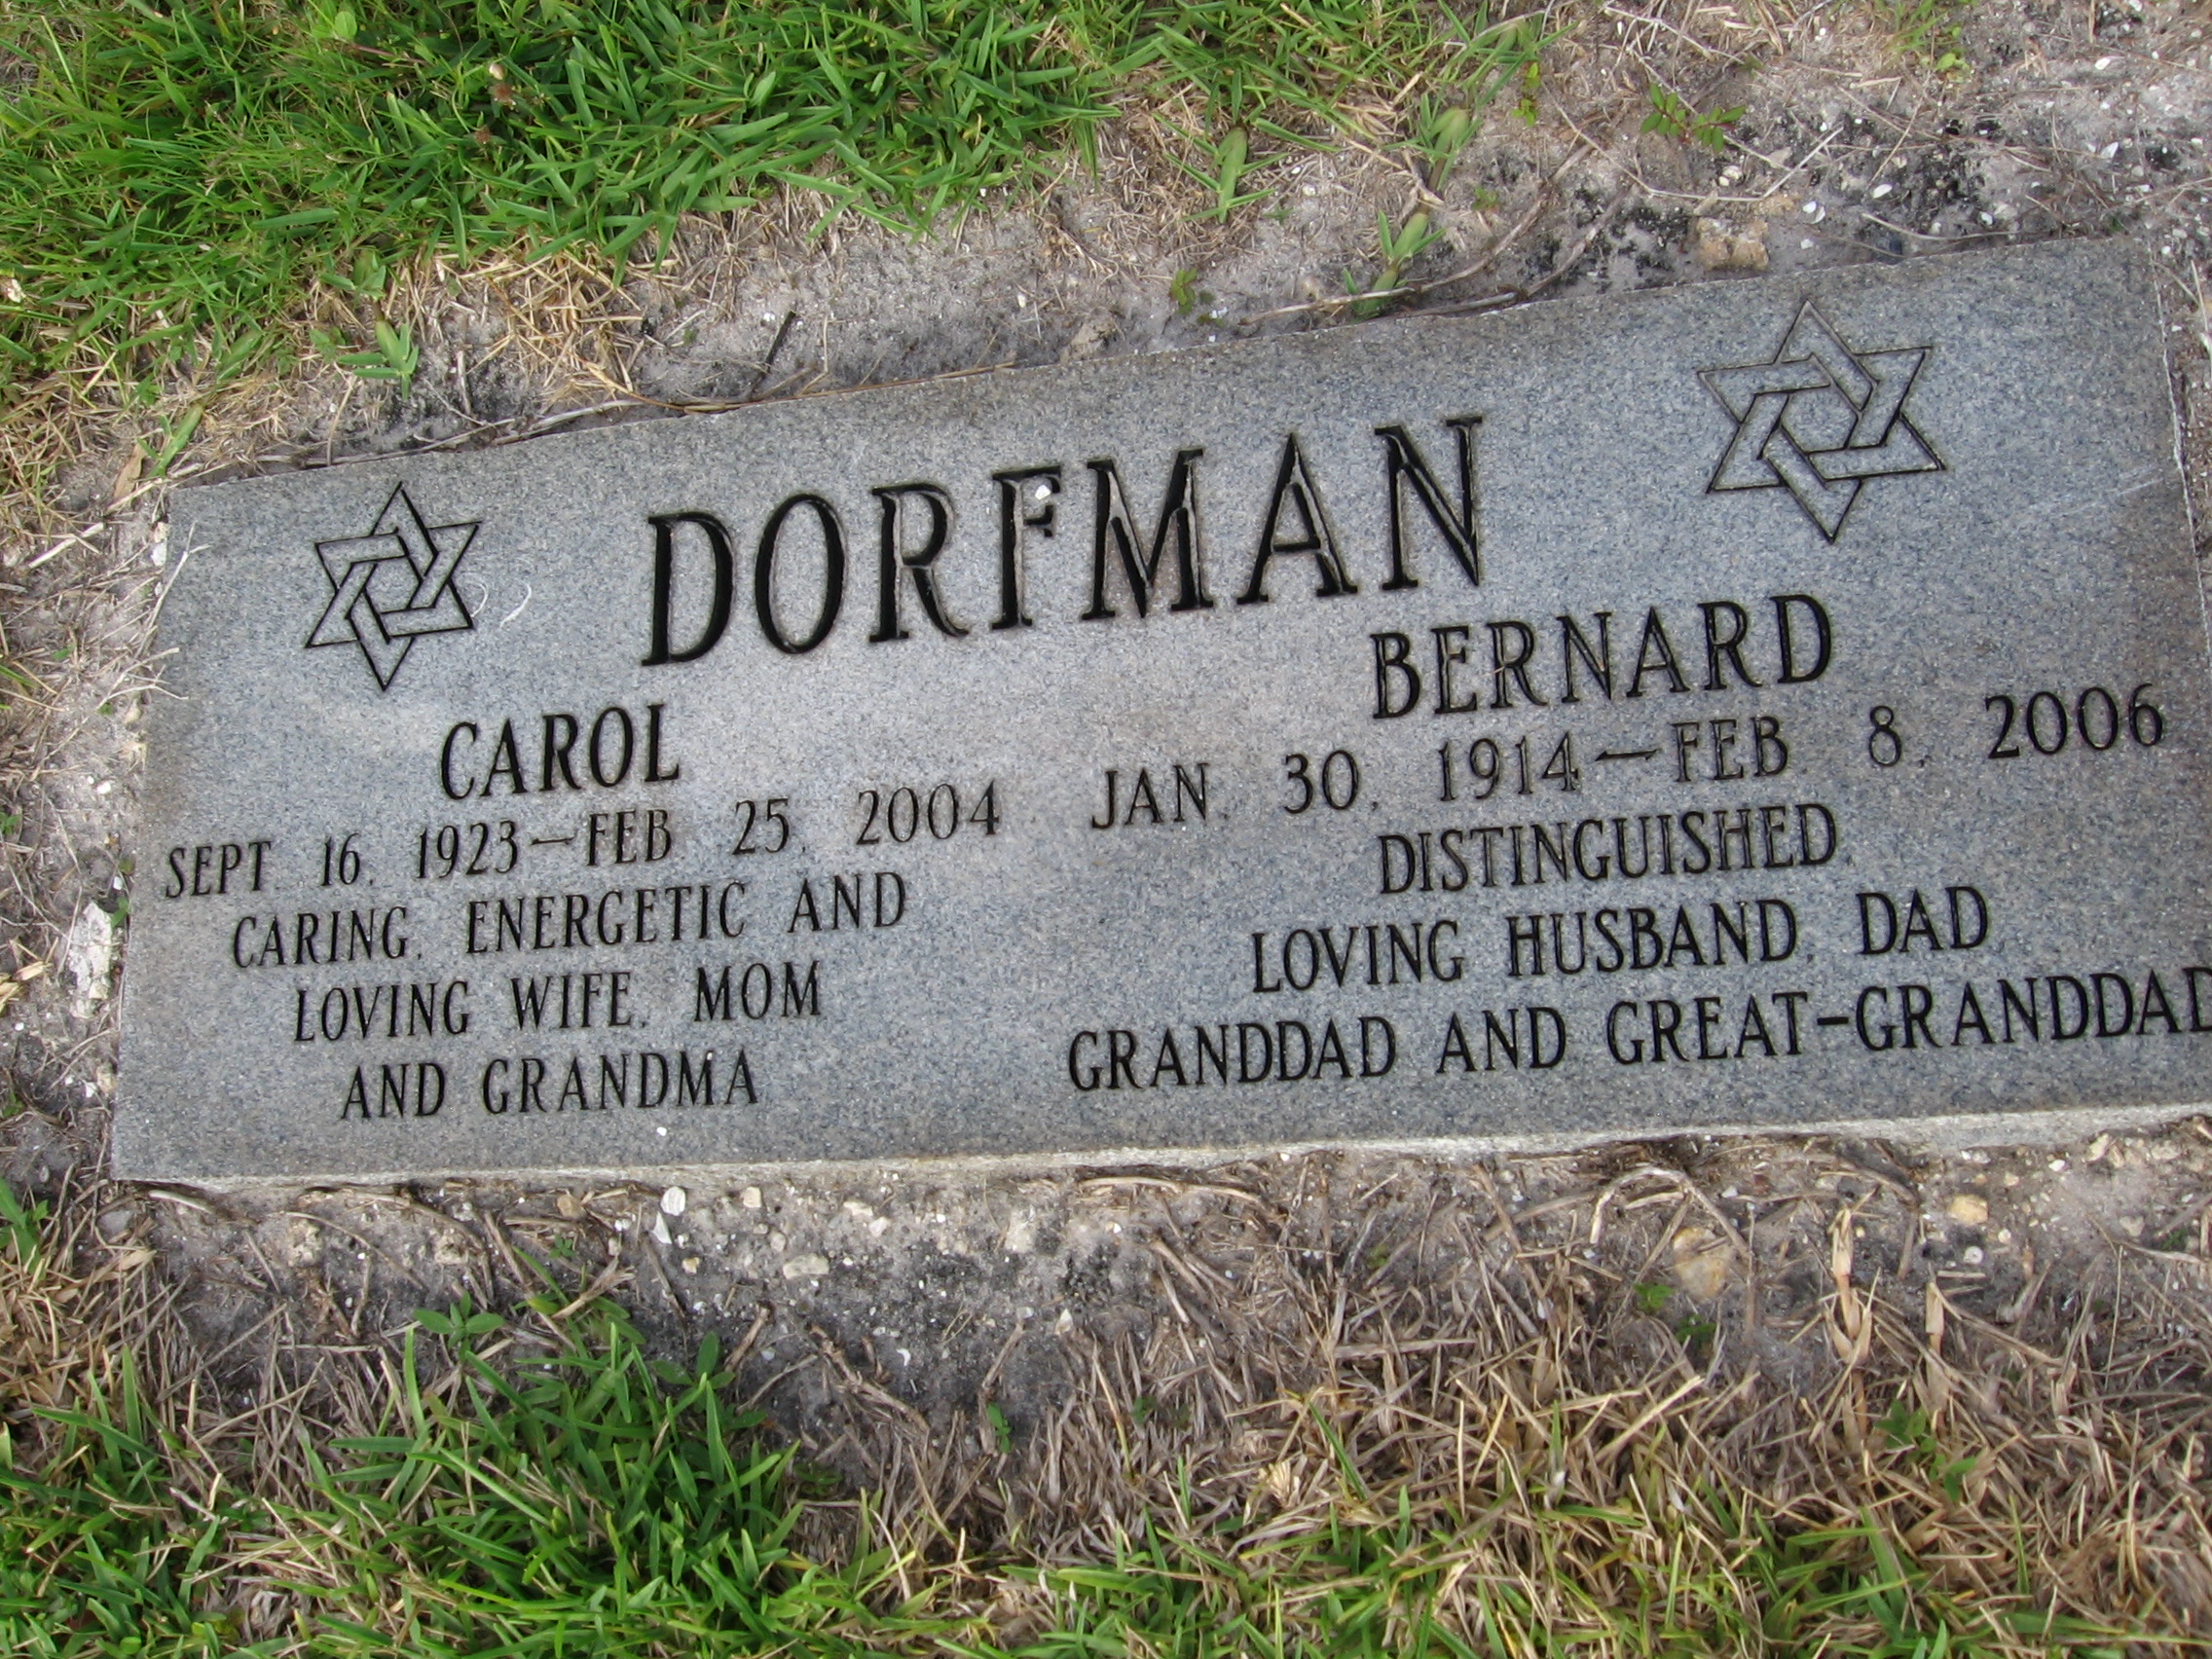 Carol Dorfman